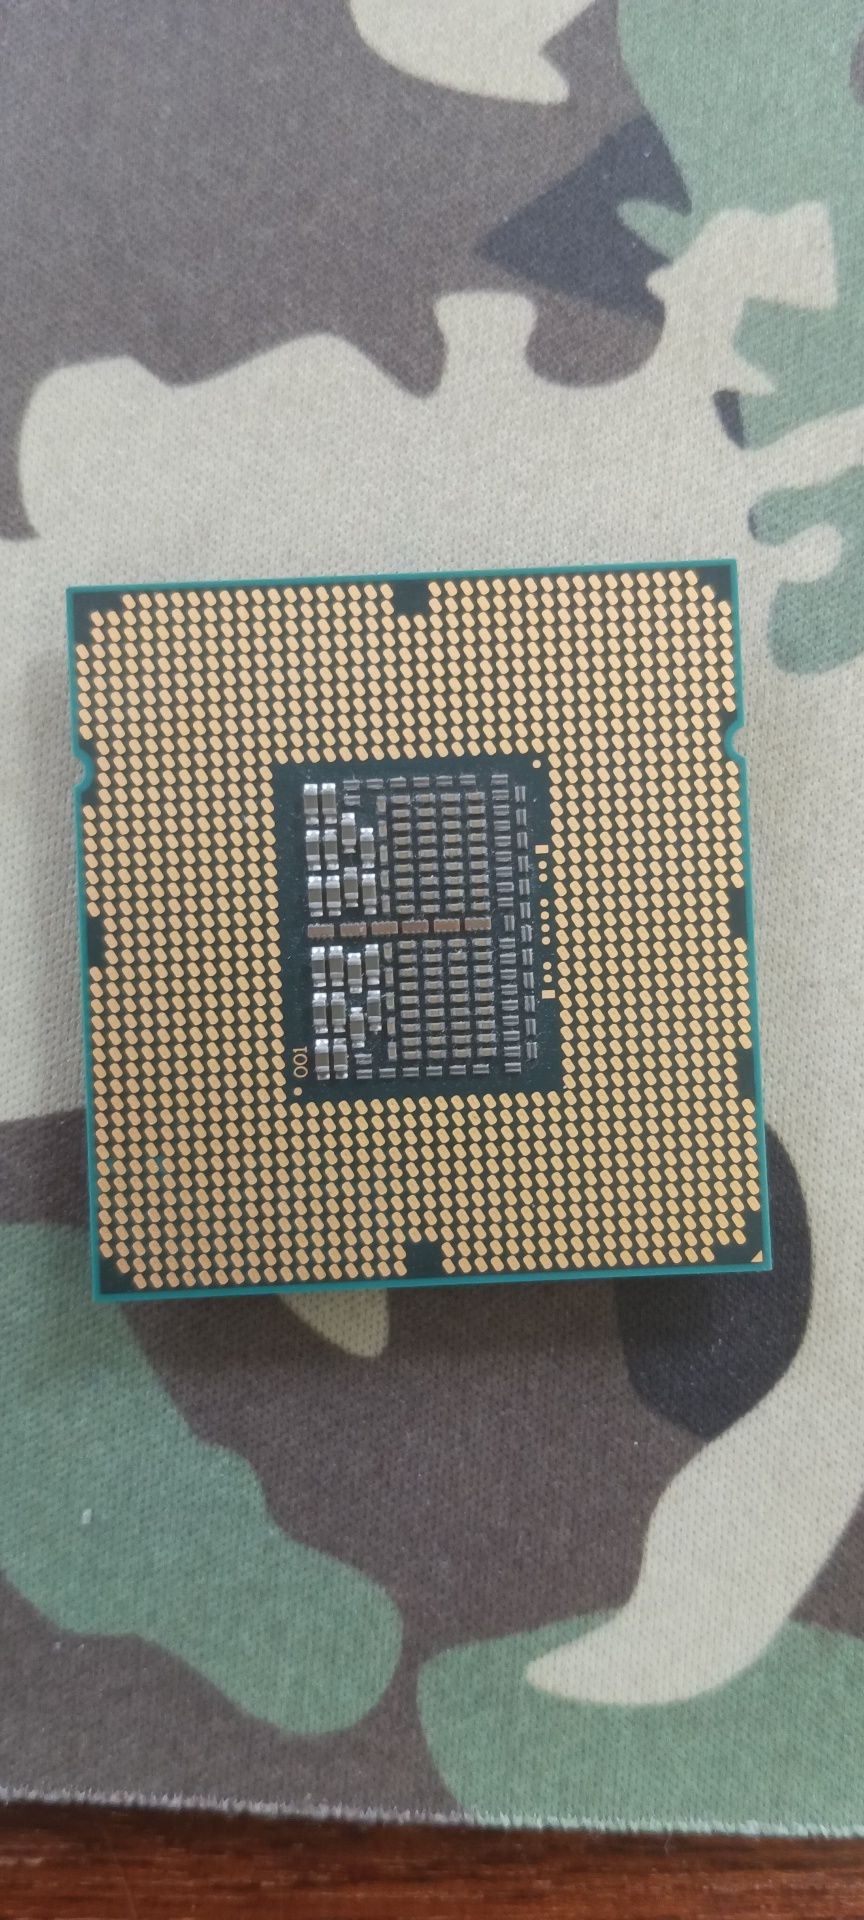 Intel xeon w3565